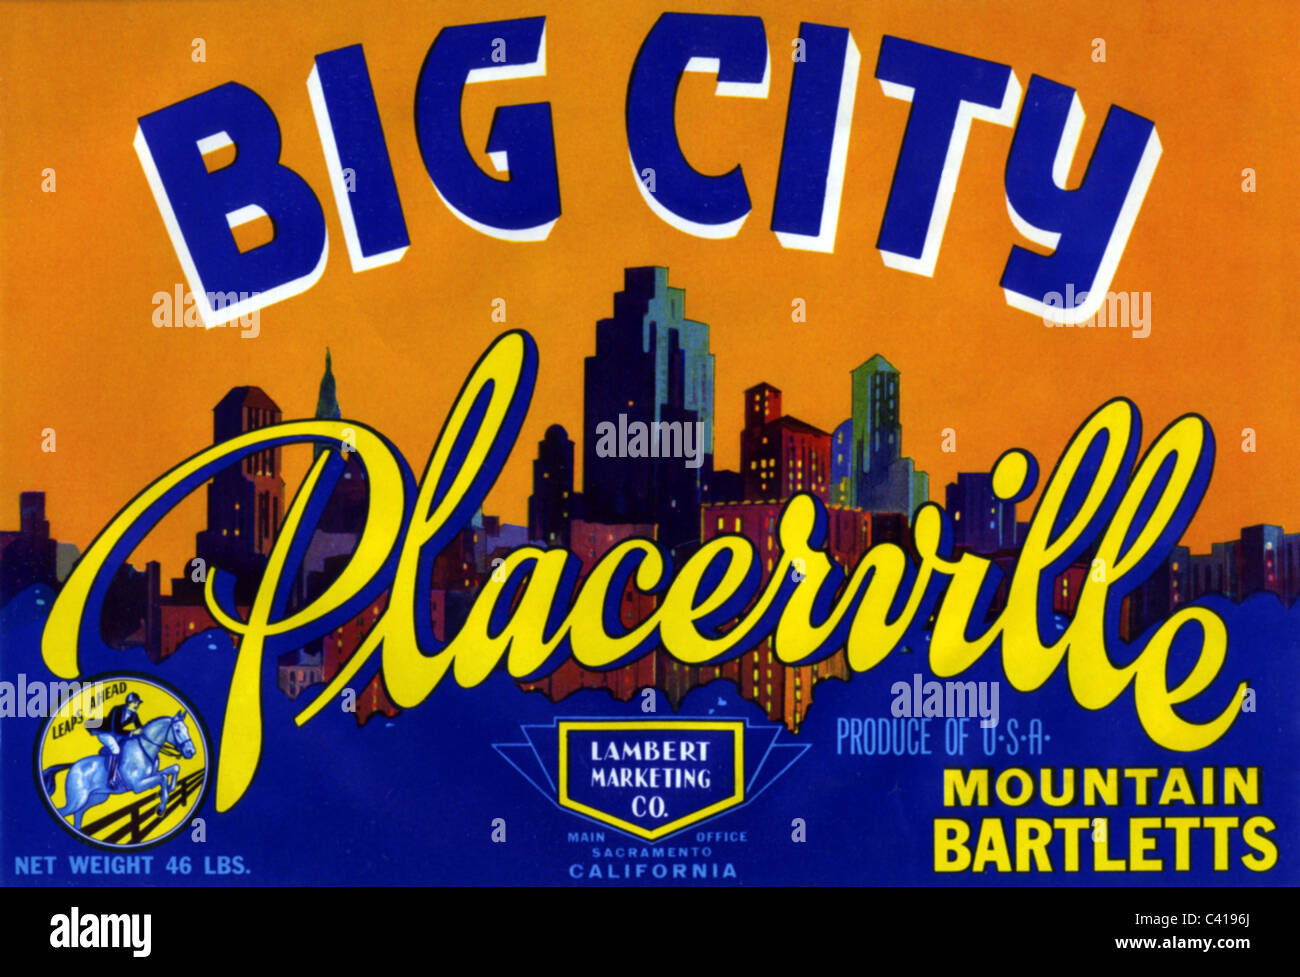 Werbung, Lebensmittel, Big City Placerville, Mountain Bartletts, 1920er Jahre, zusätzliche-Rights-Clearences-not available Stockfoto